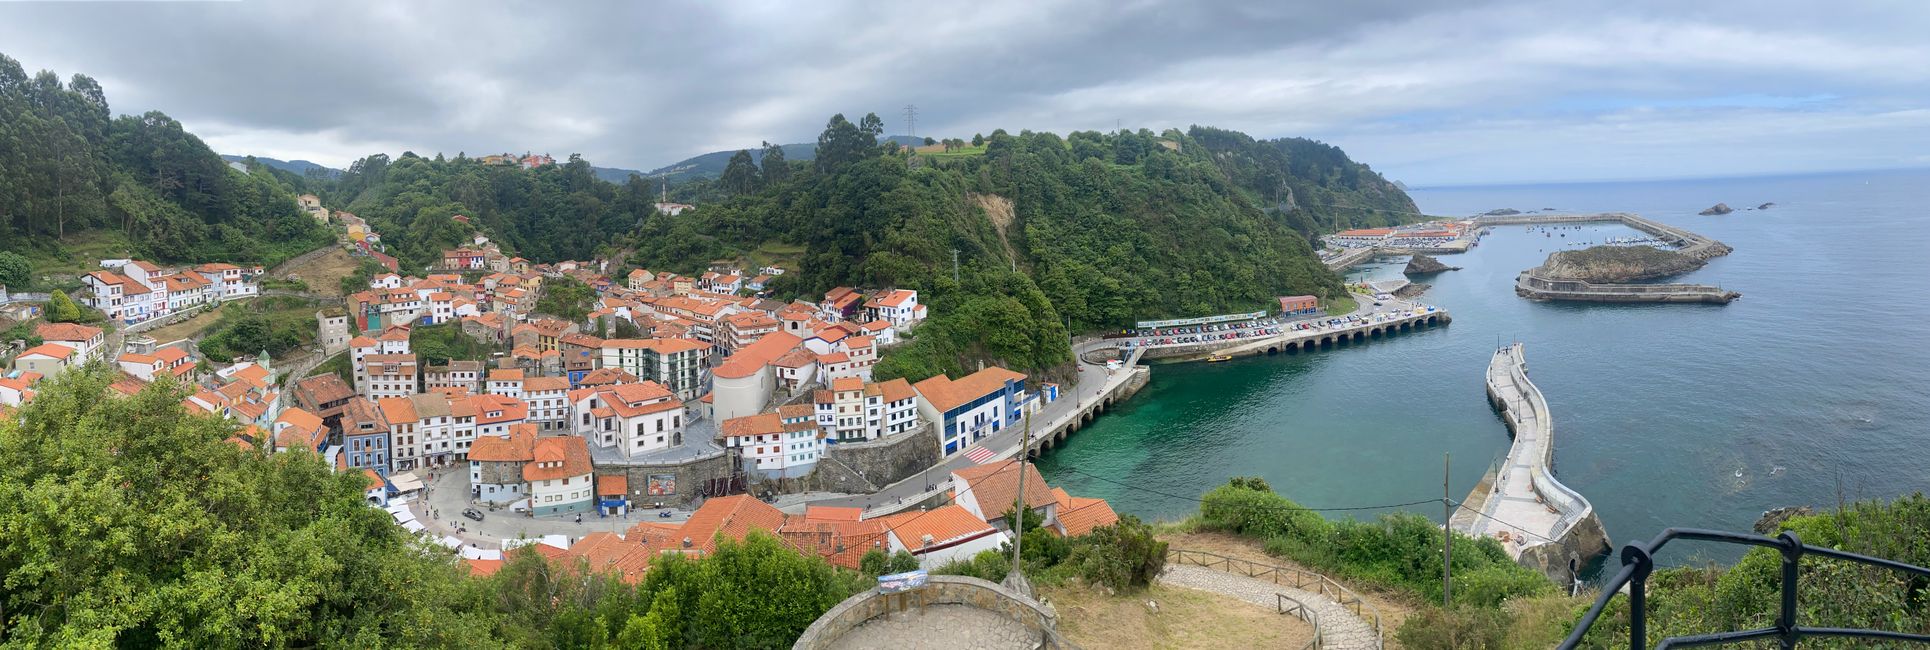 Galicia, Costa Verde a ak lakay atravè Dune du Pilat la